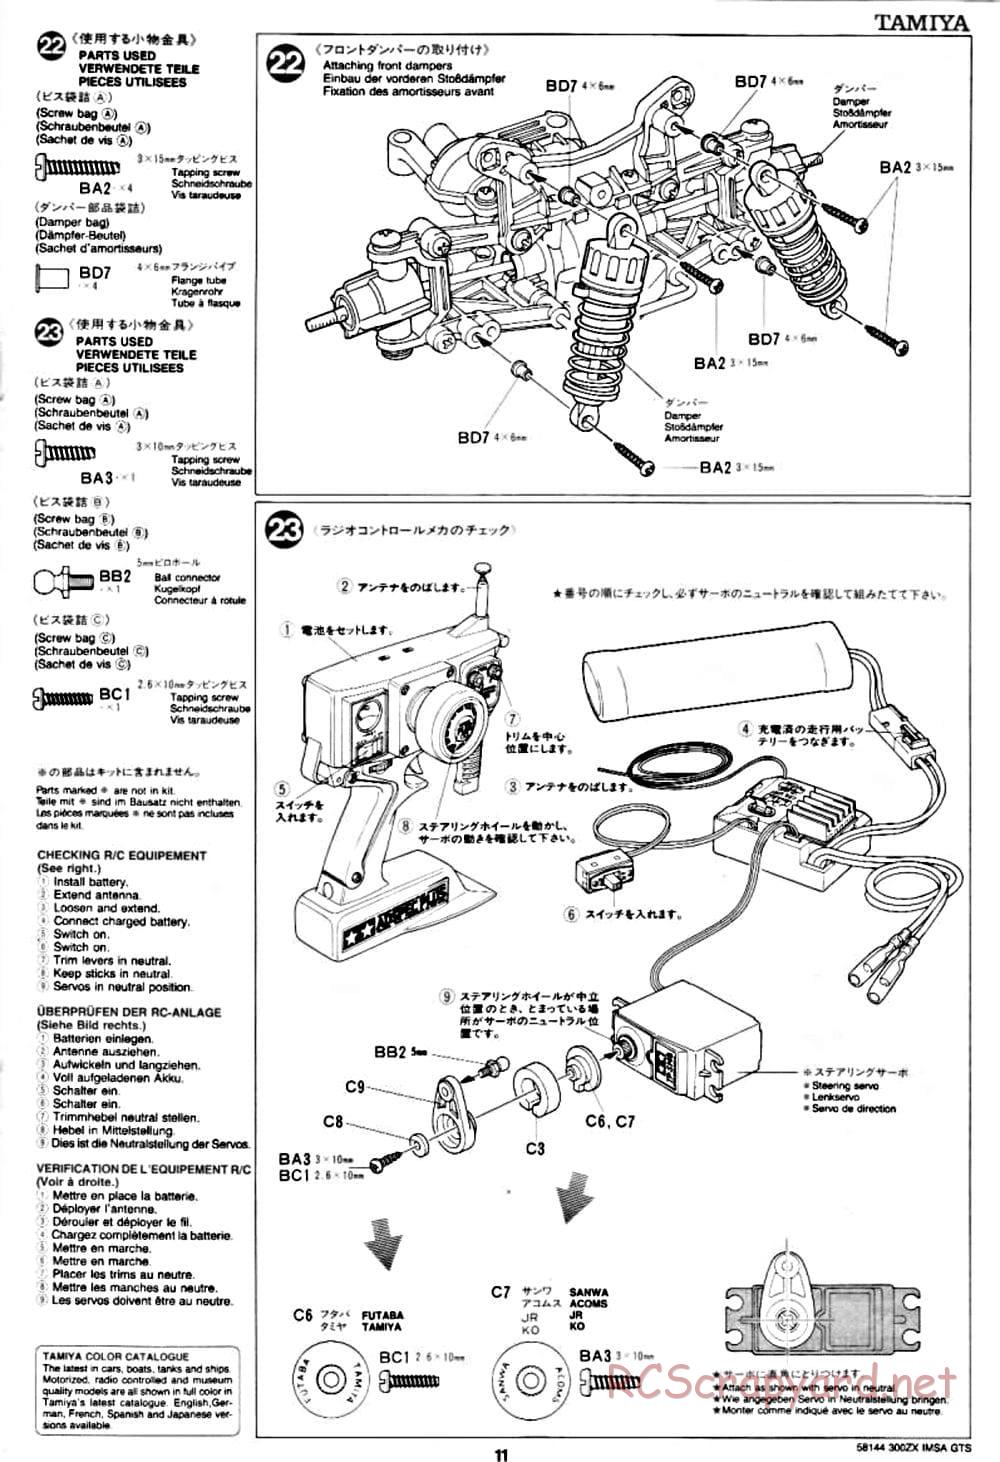 Tamiya - Nissan 300ZX IMSA-GTS - TA-02W Chassis - Manual - Page 11